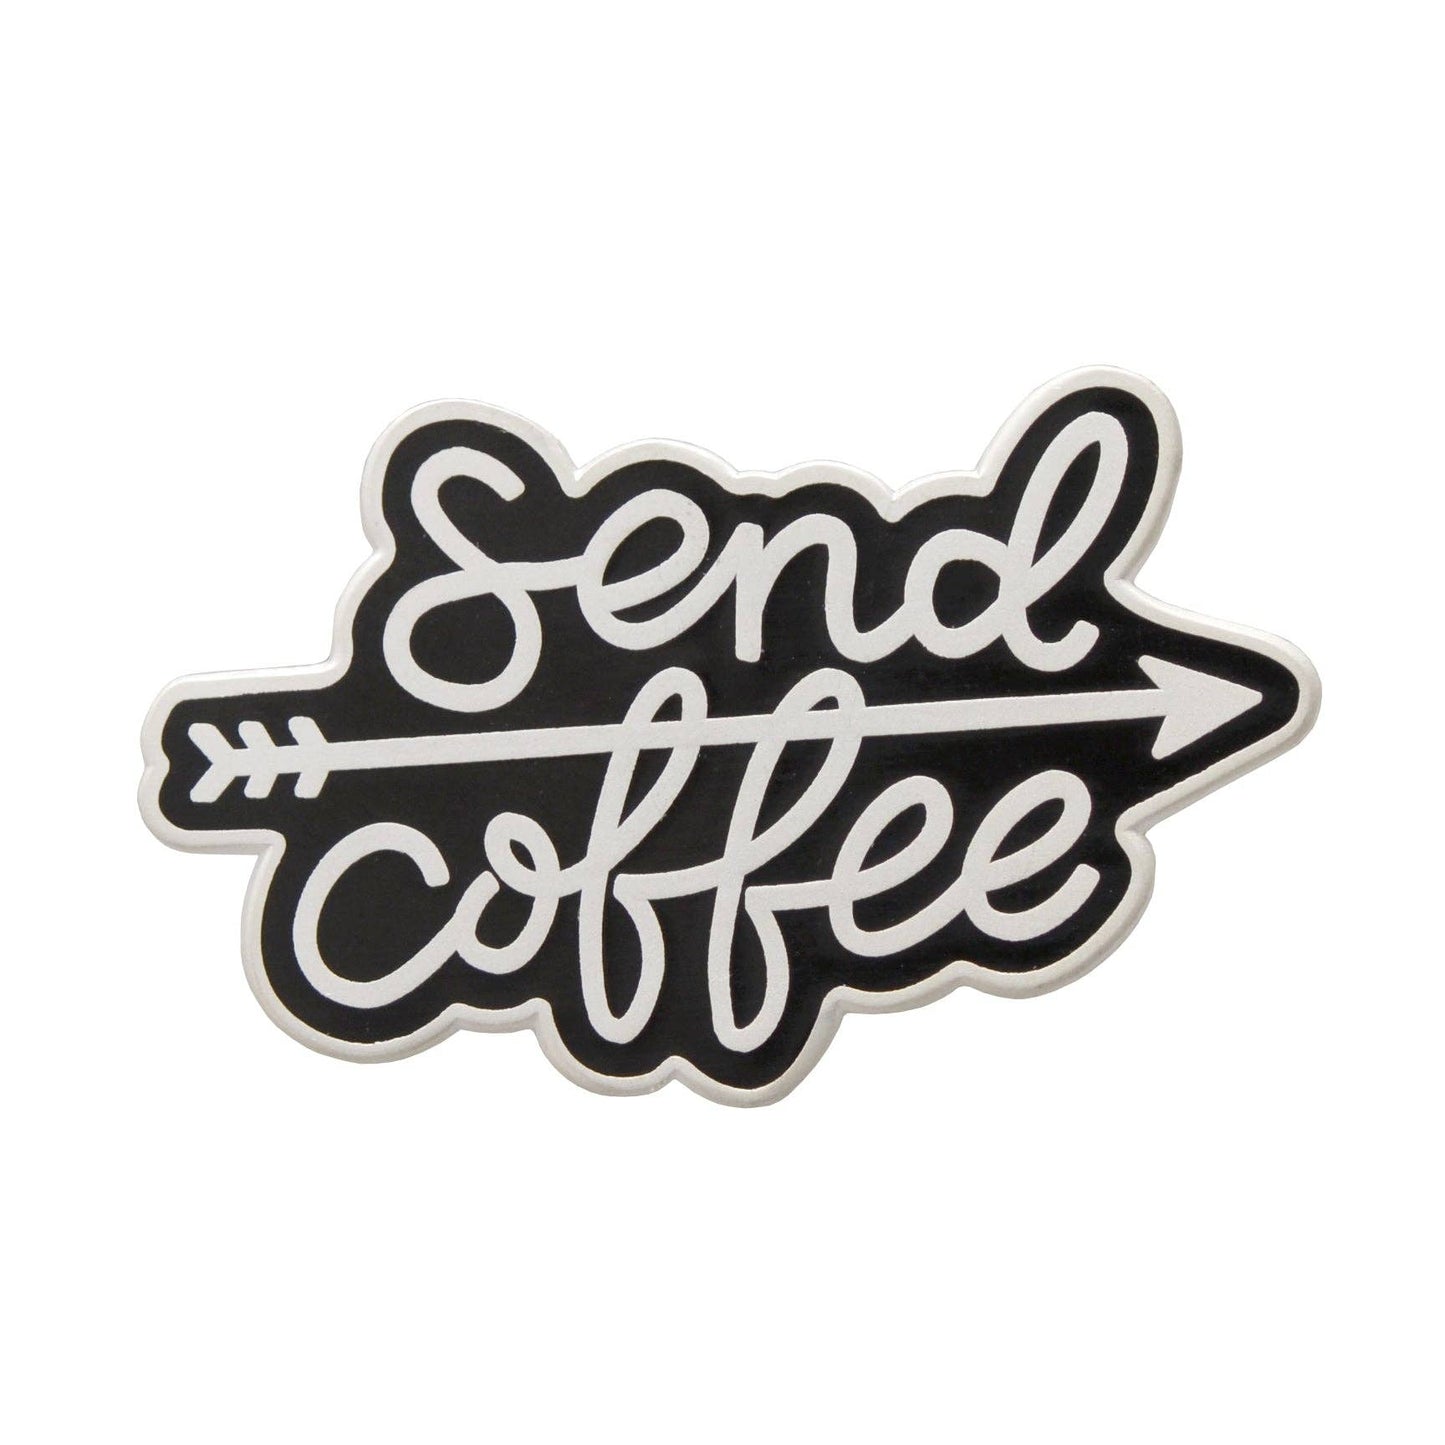 Send coffee positive pin badge